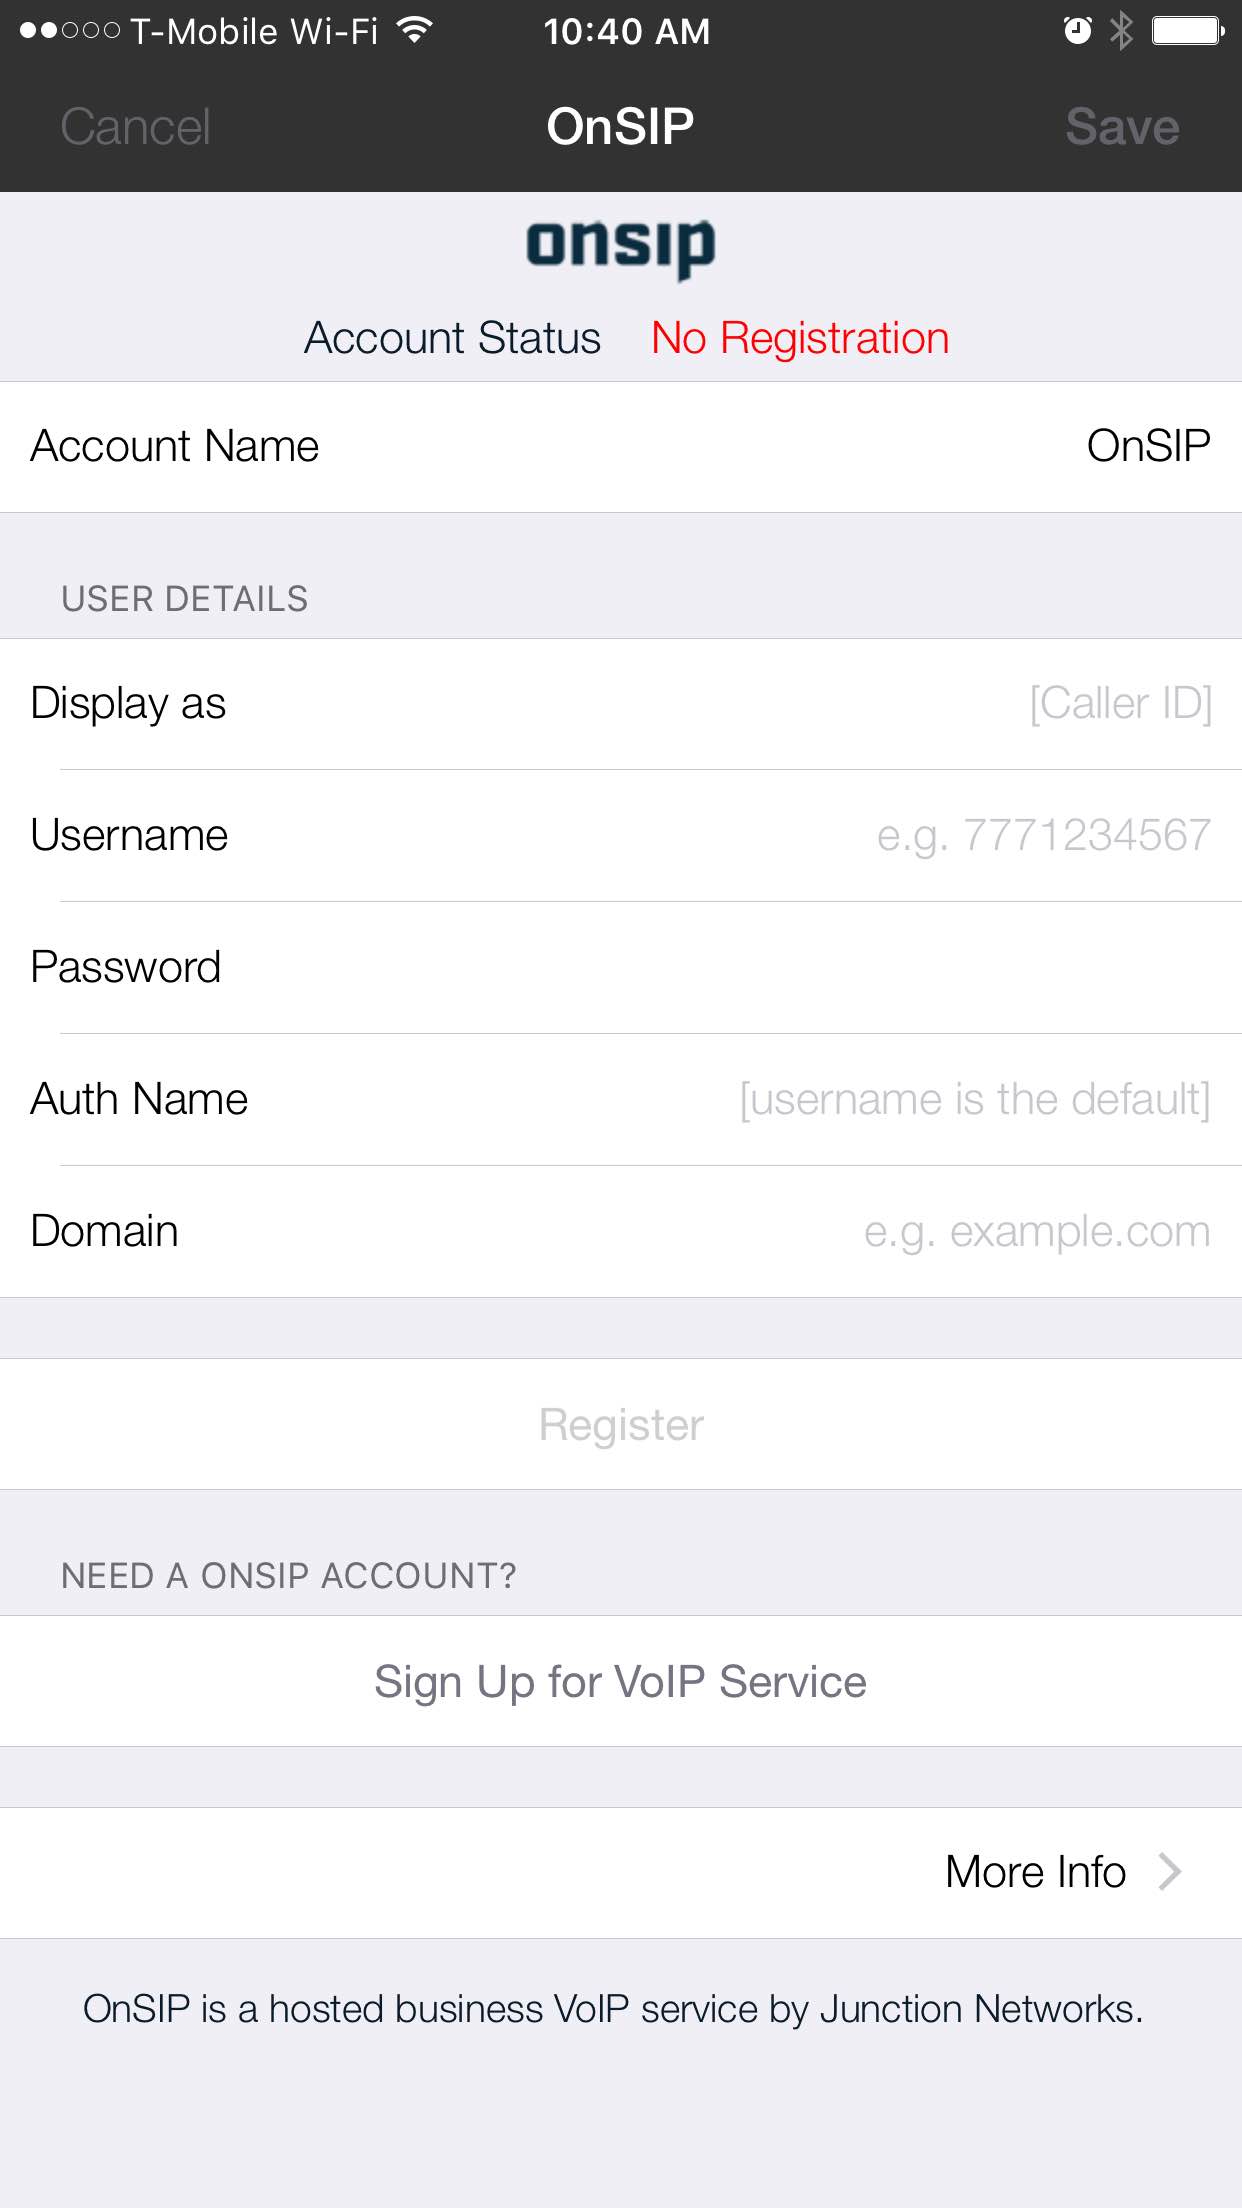 onsip username and domain